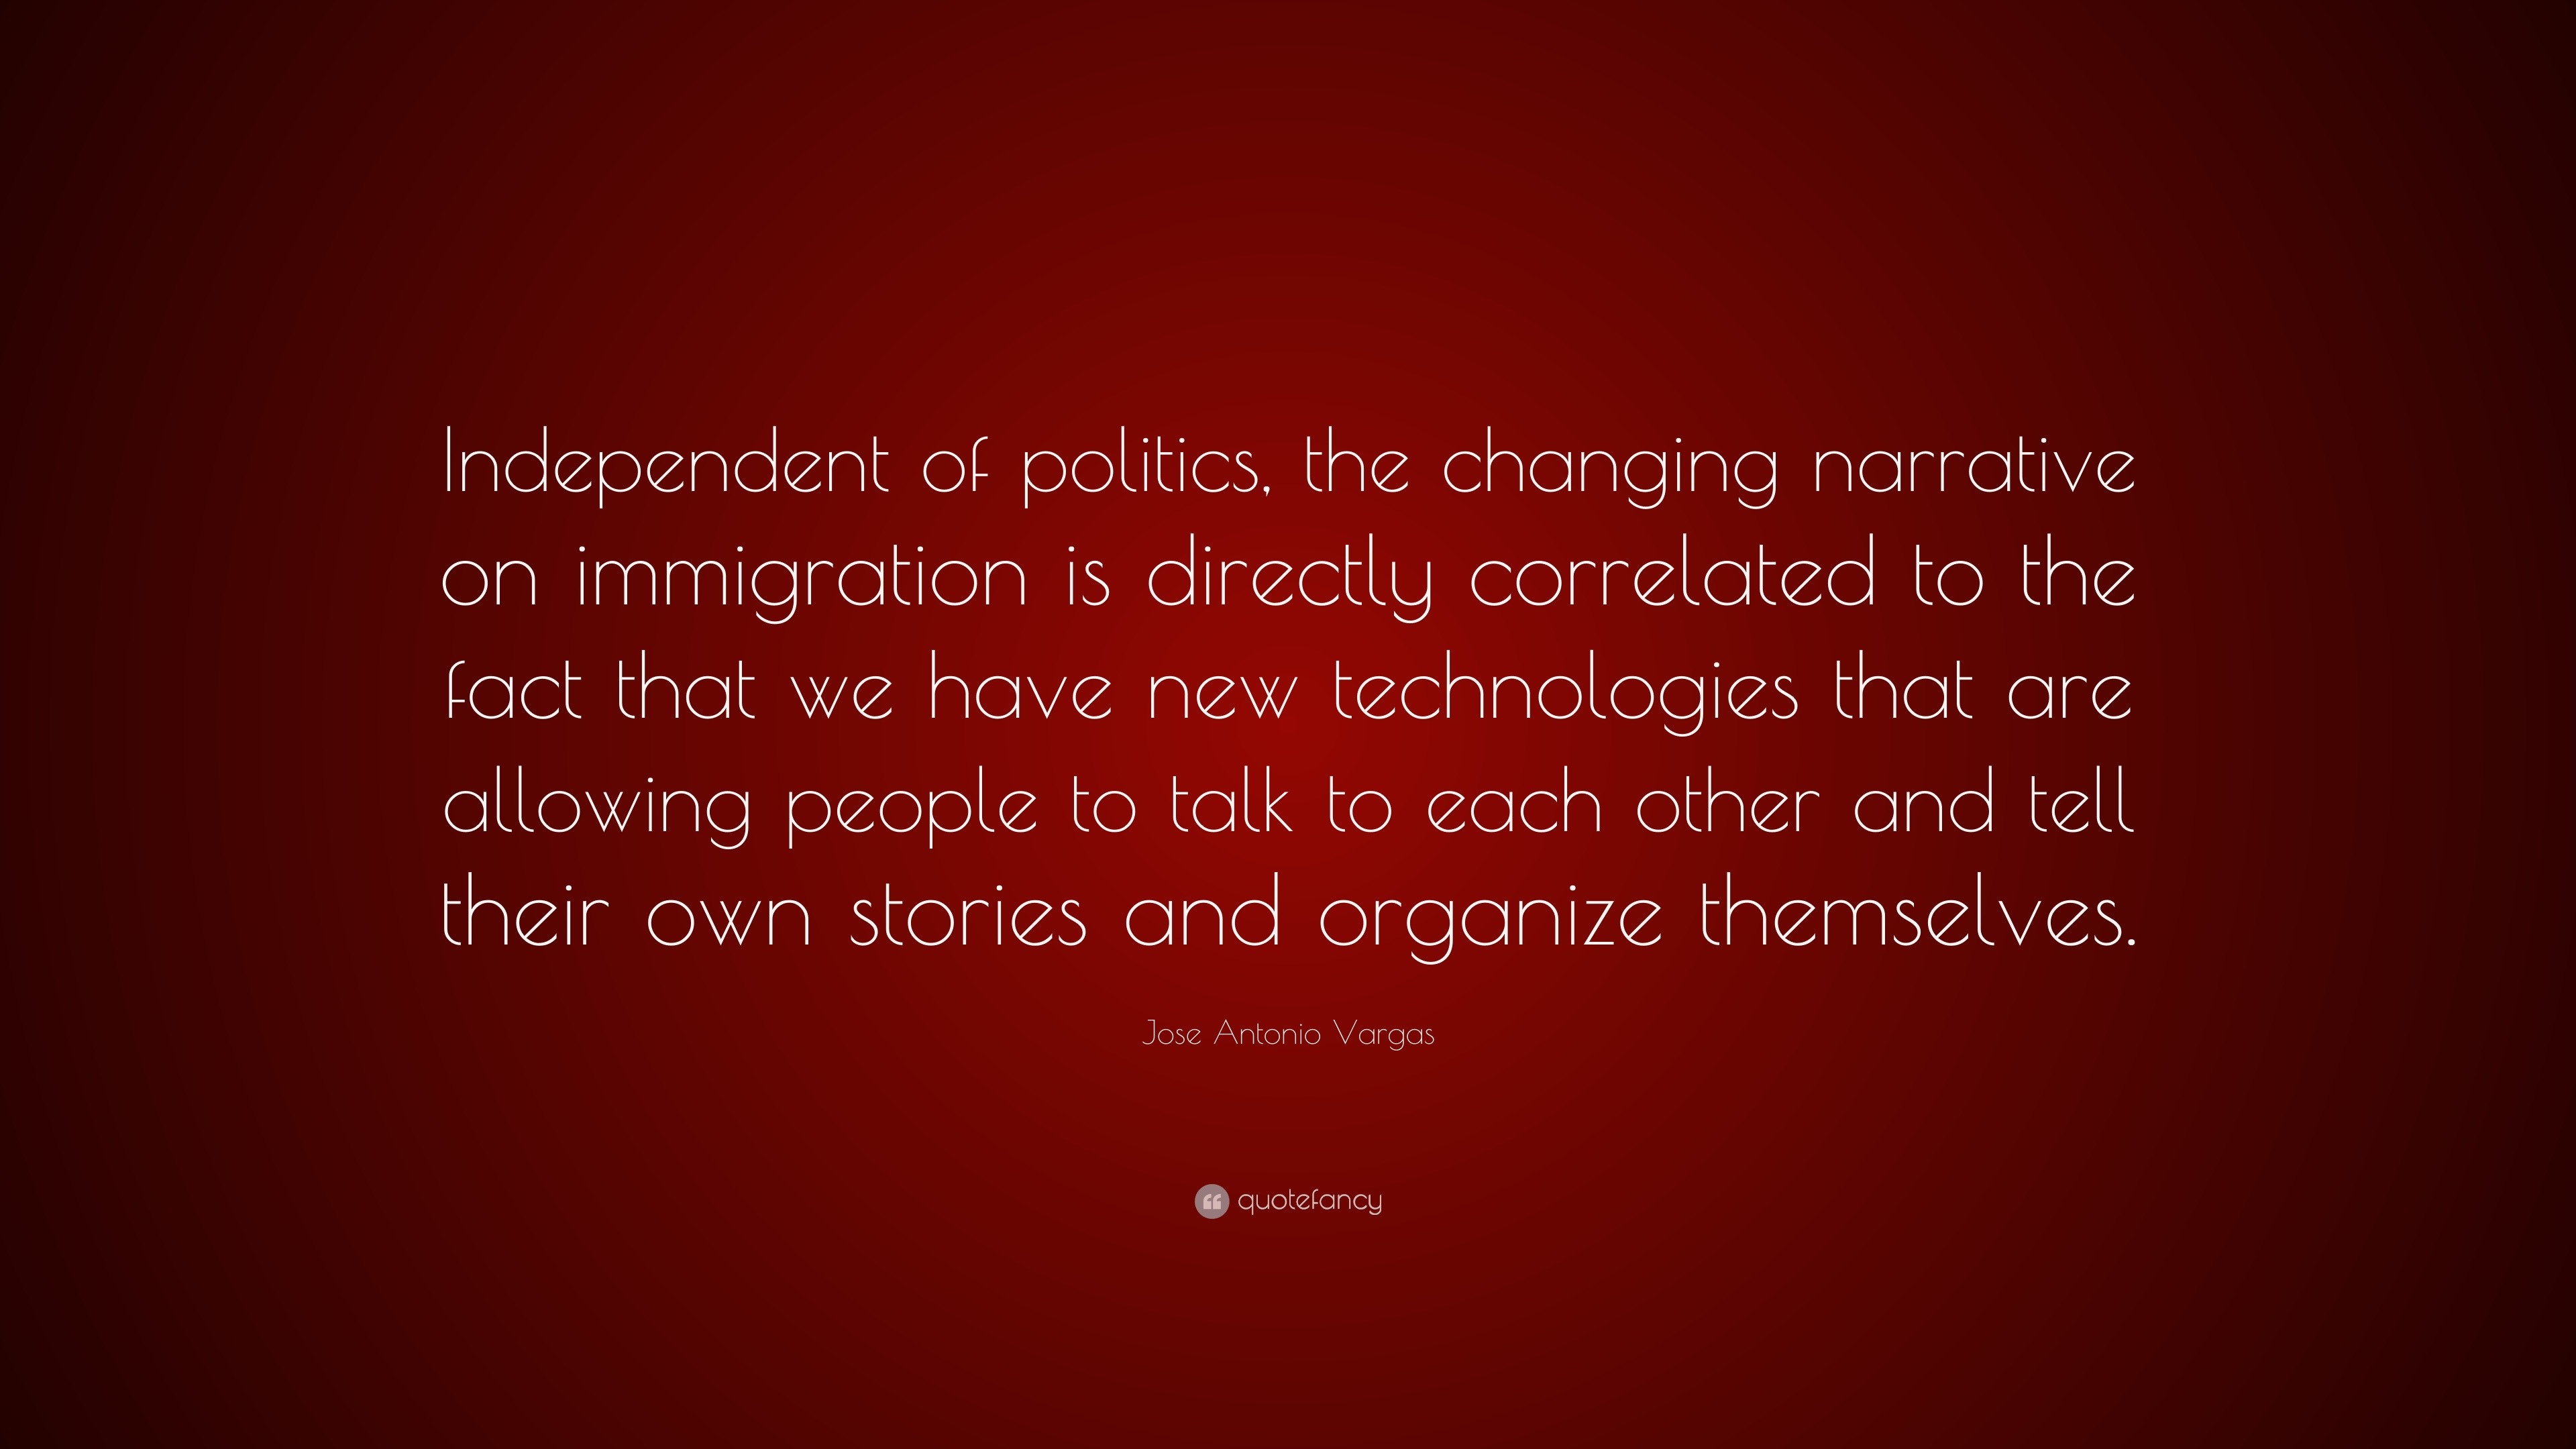 Jose Antonio Vargas Quote: “Independent of politics, the changing